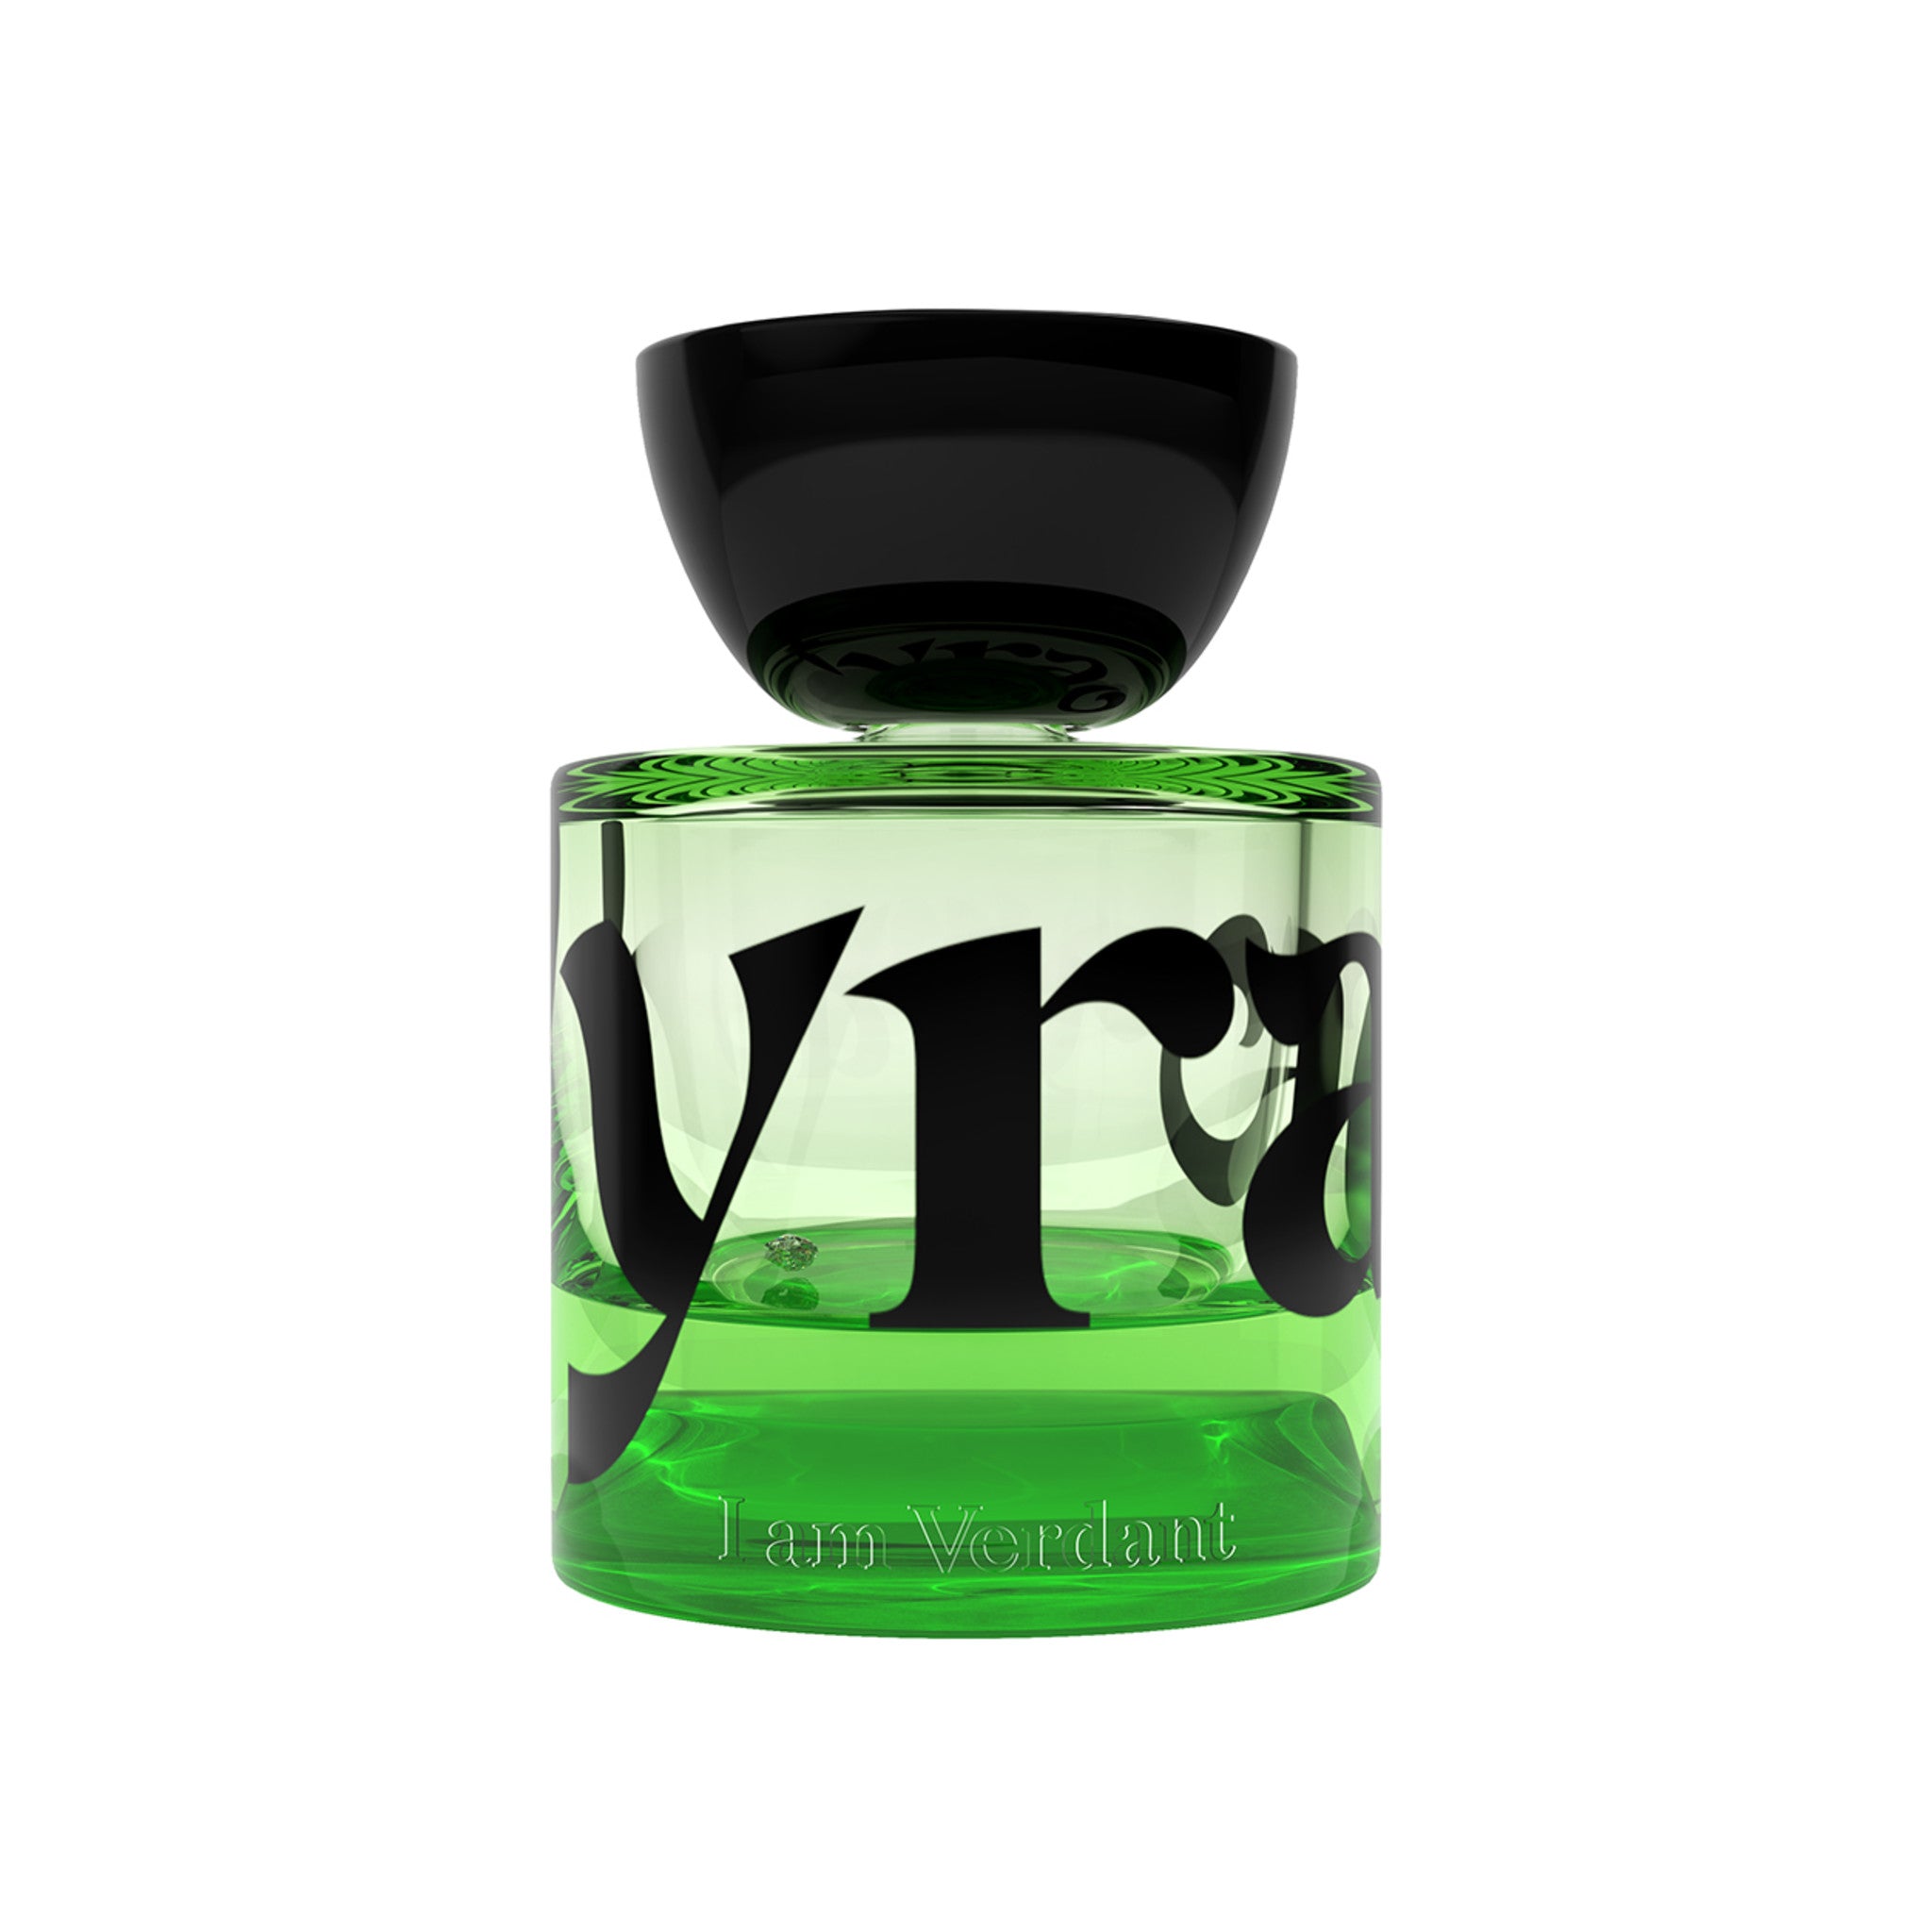 Vyrao I am Verdant Eau de Parfum Size variant: 1.69 fl oz main image.